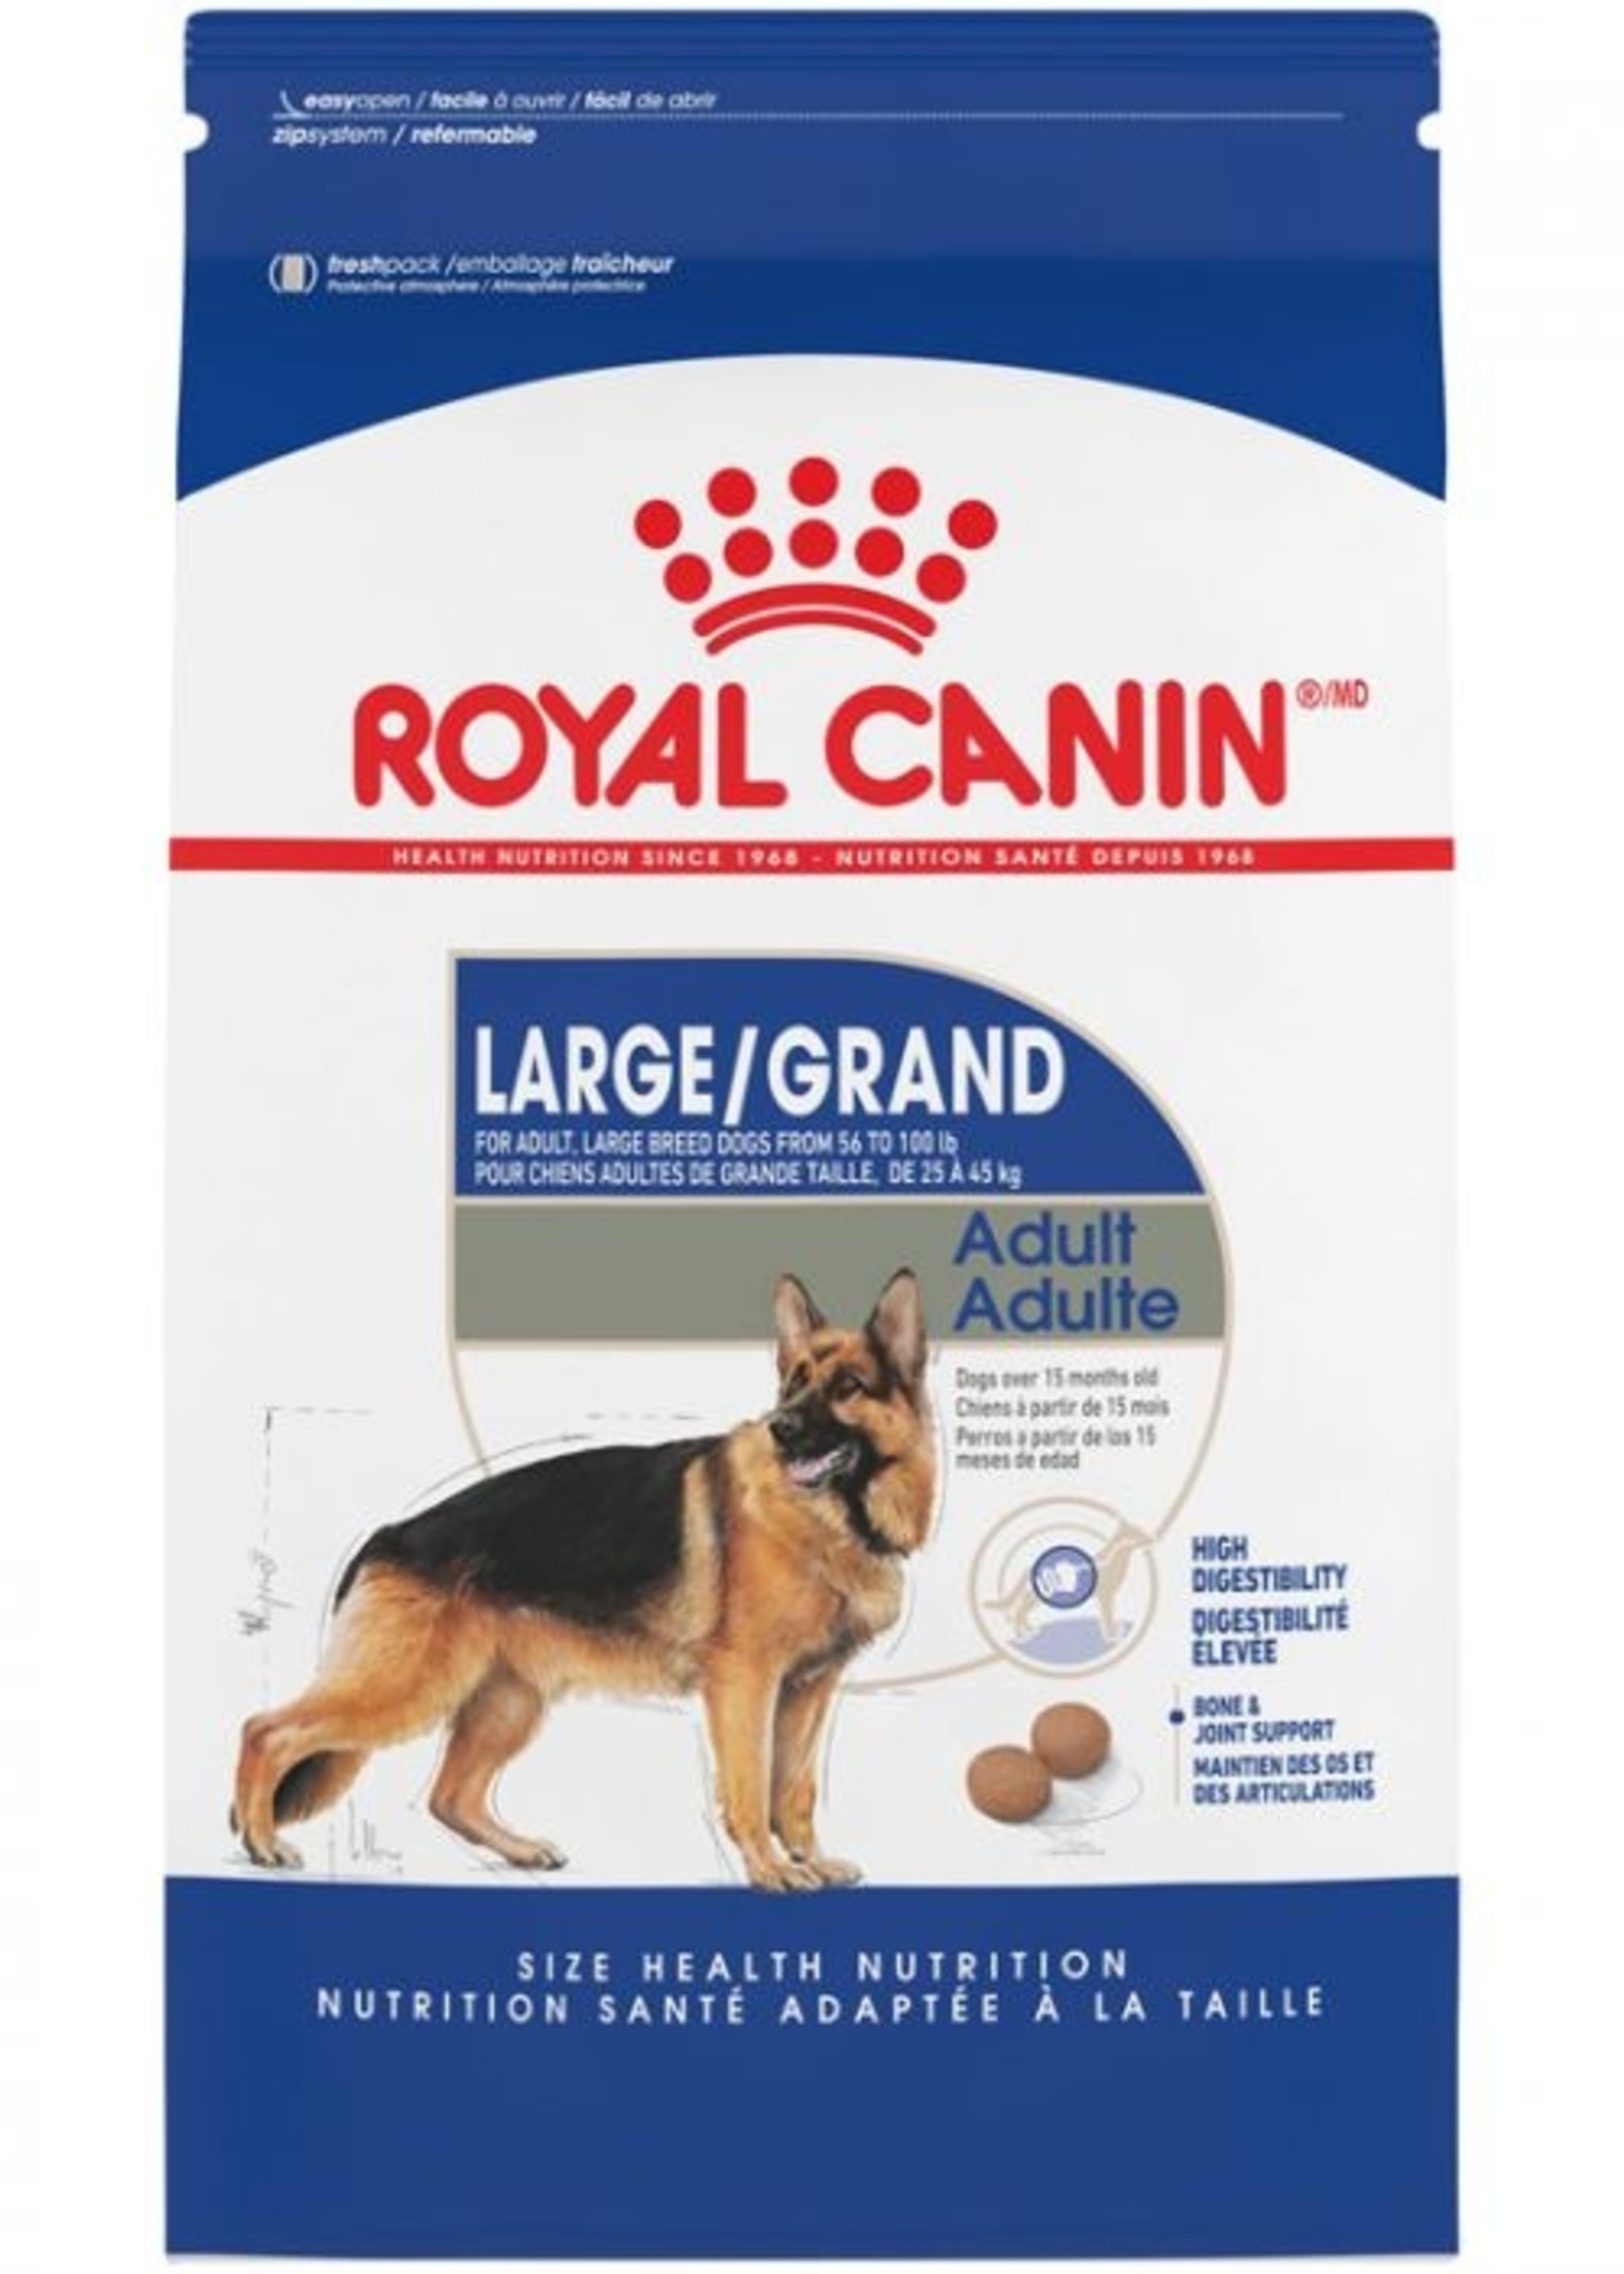 Royal Canin® Royal Canin Large Breed 35lbs